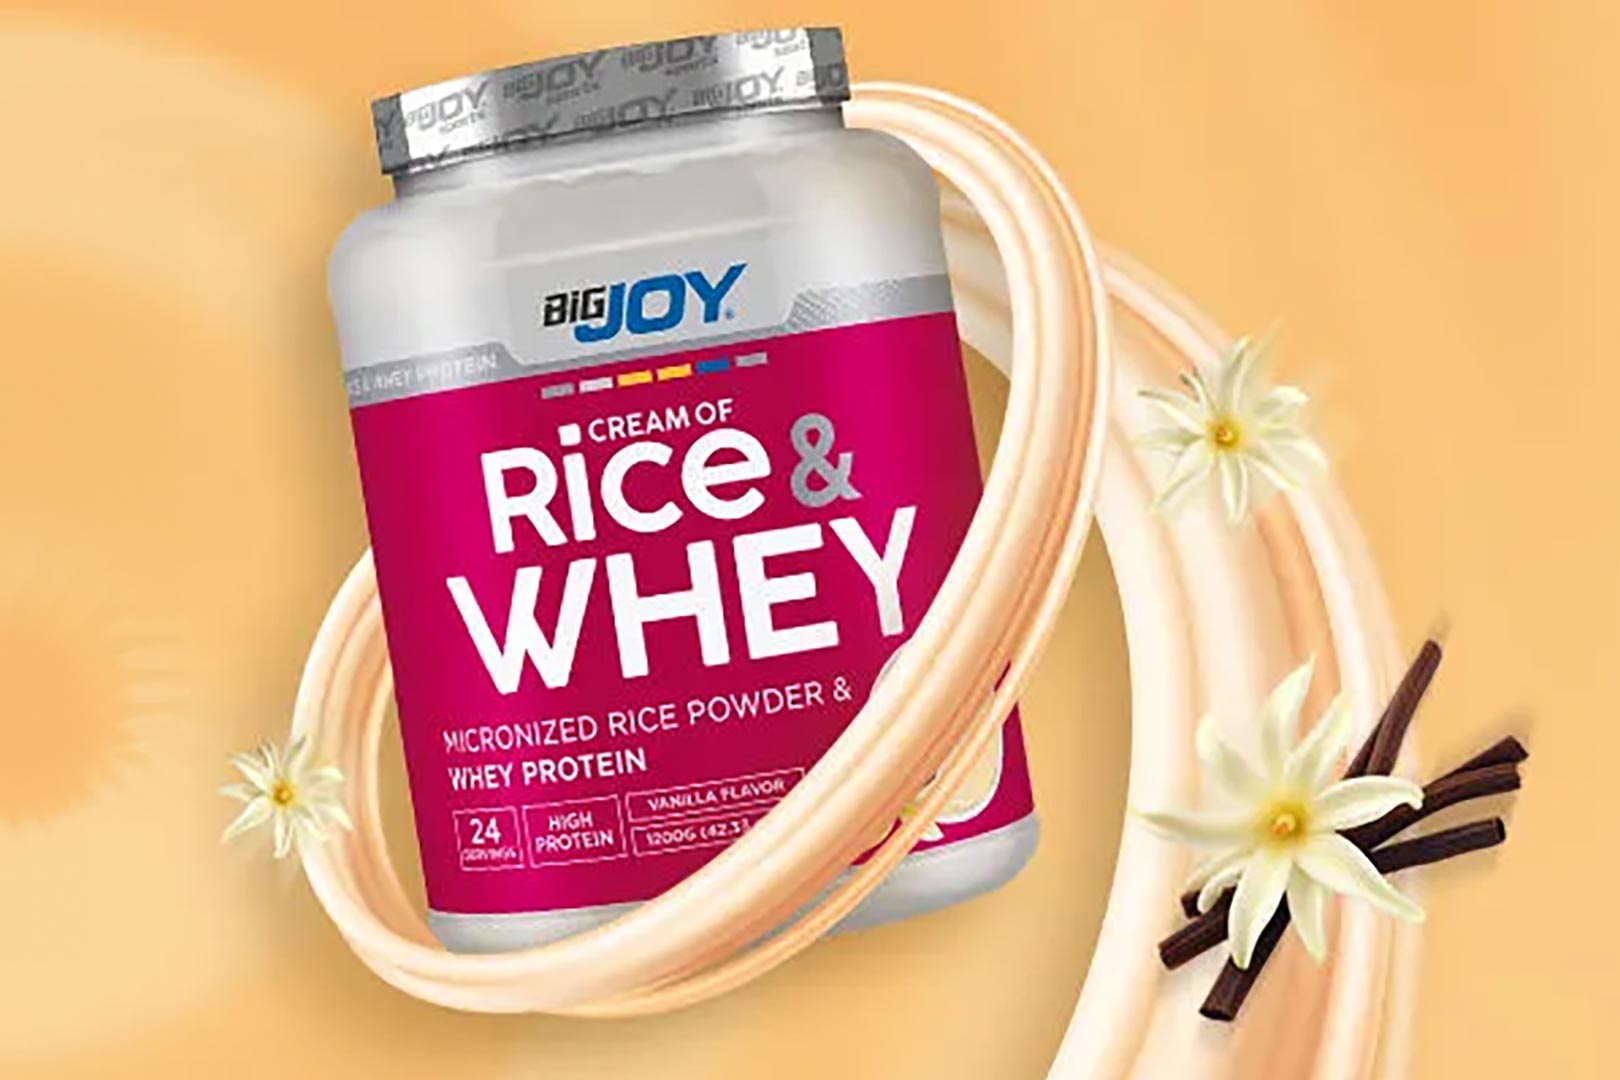 Big Joy Rice And Whey